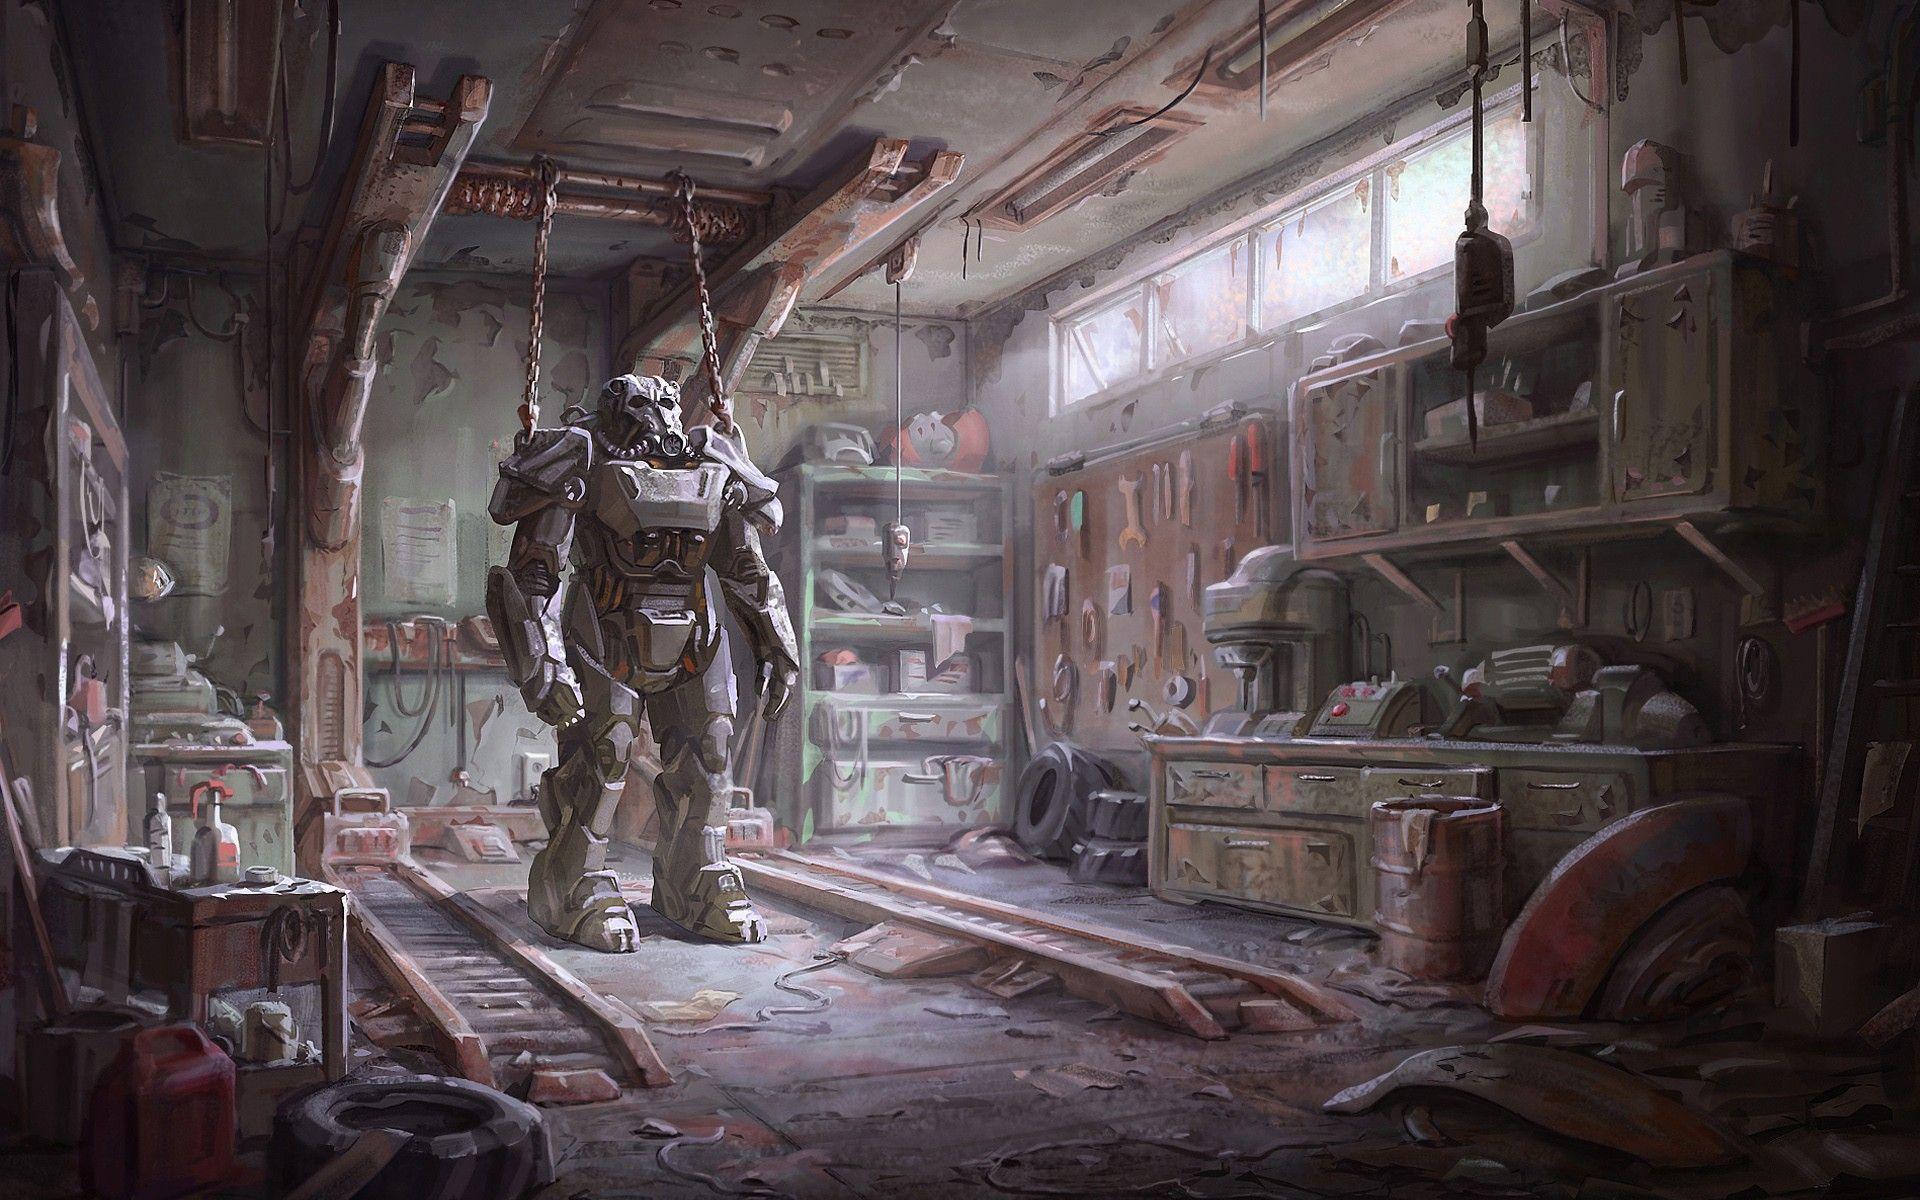 Fallout 4 4k Uhd Wallpapers Top Free Fallout 4 4k Uhd Backgrounds Wallpaperaccess